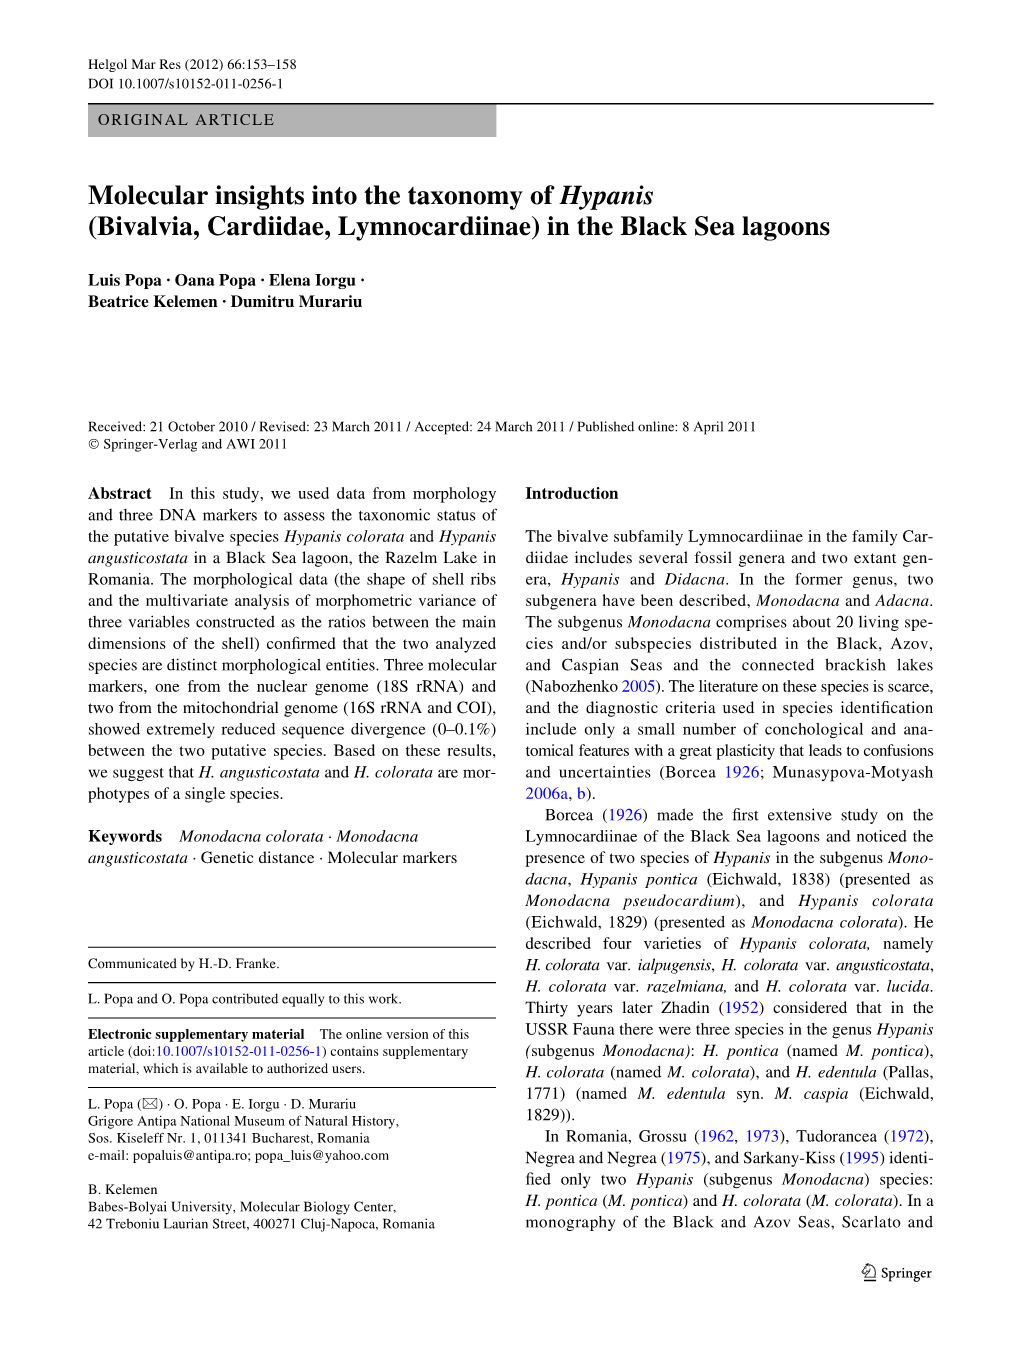 Molecular Insights Into the Taxonomy of Hypanis (Bivalvia, Cardiidae, Lymnocardiinae) in the Black Sea Lagoons